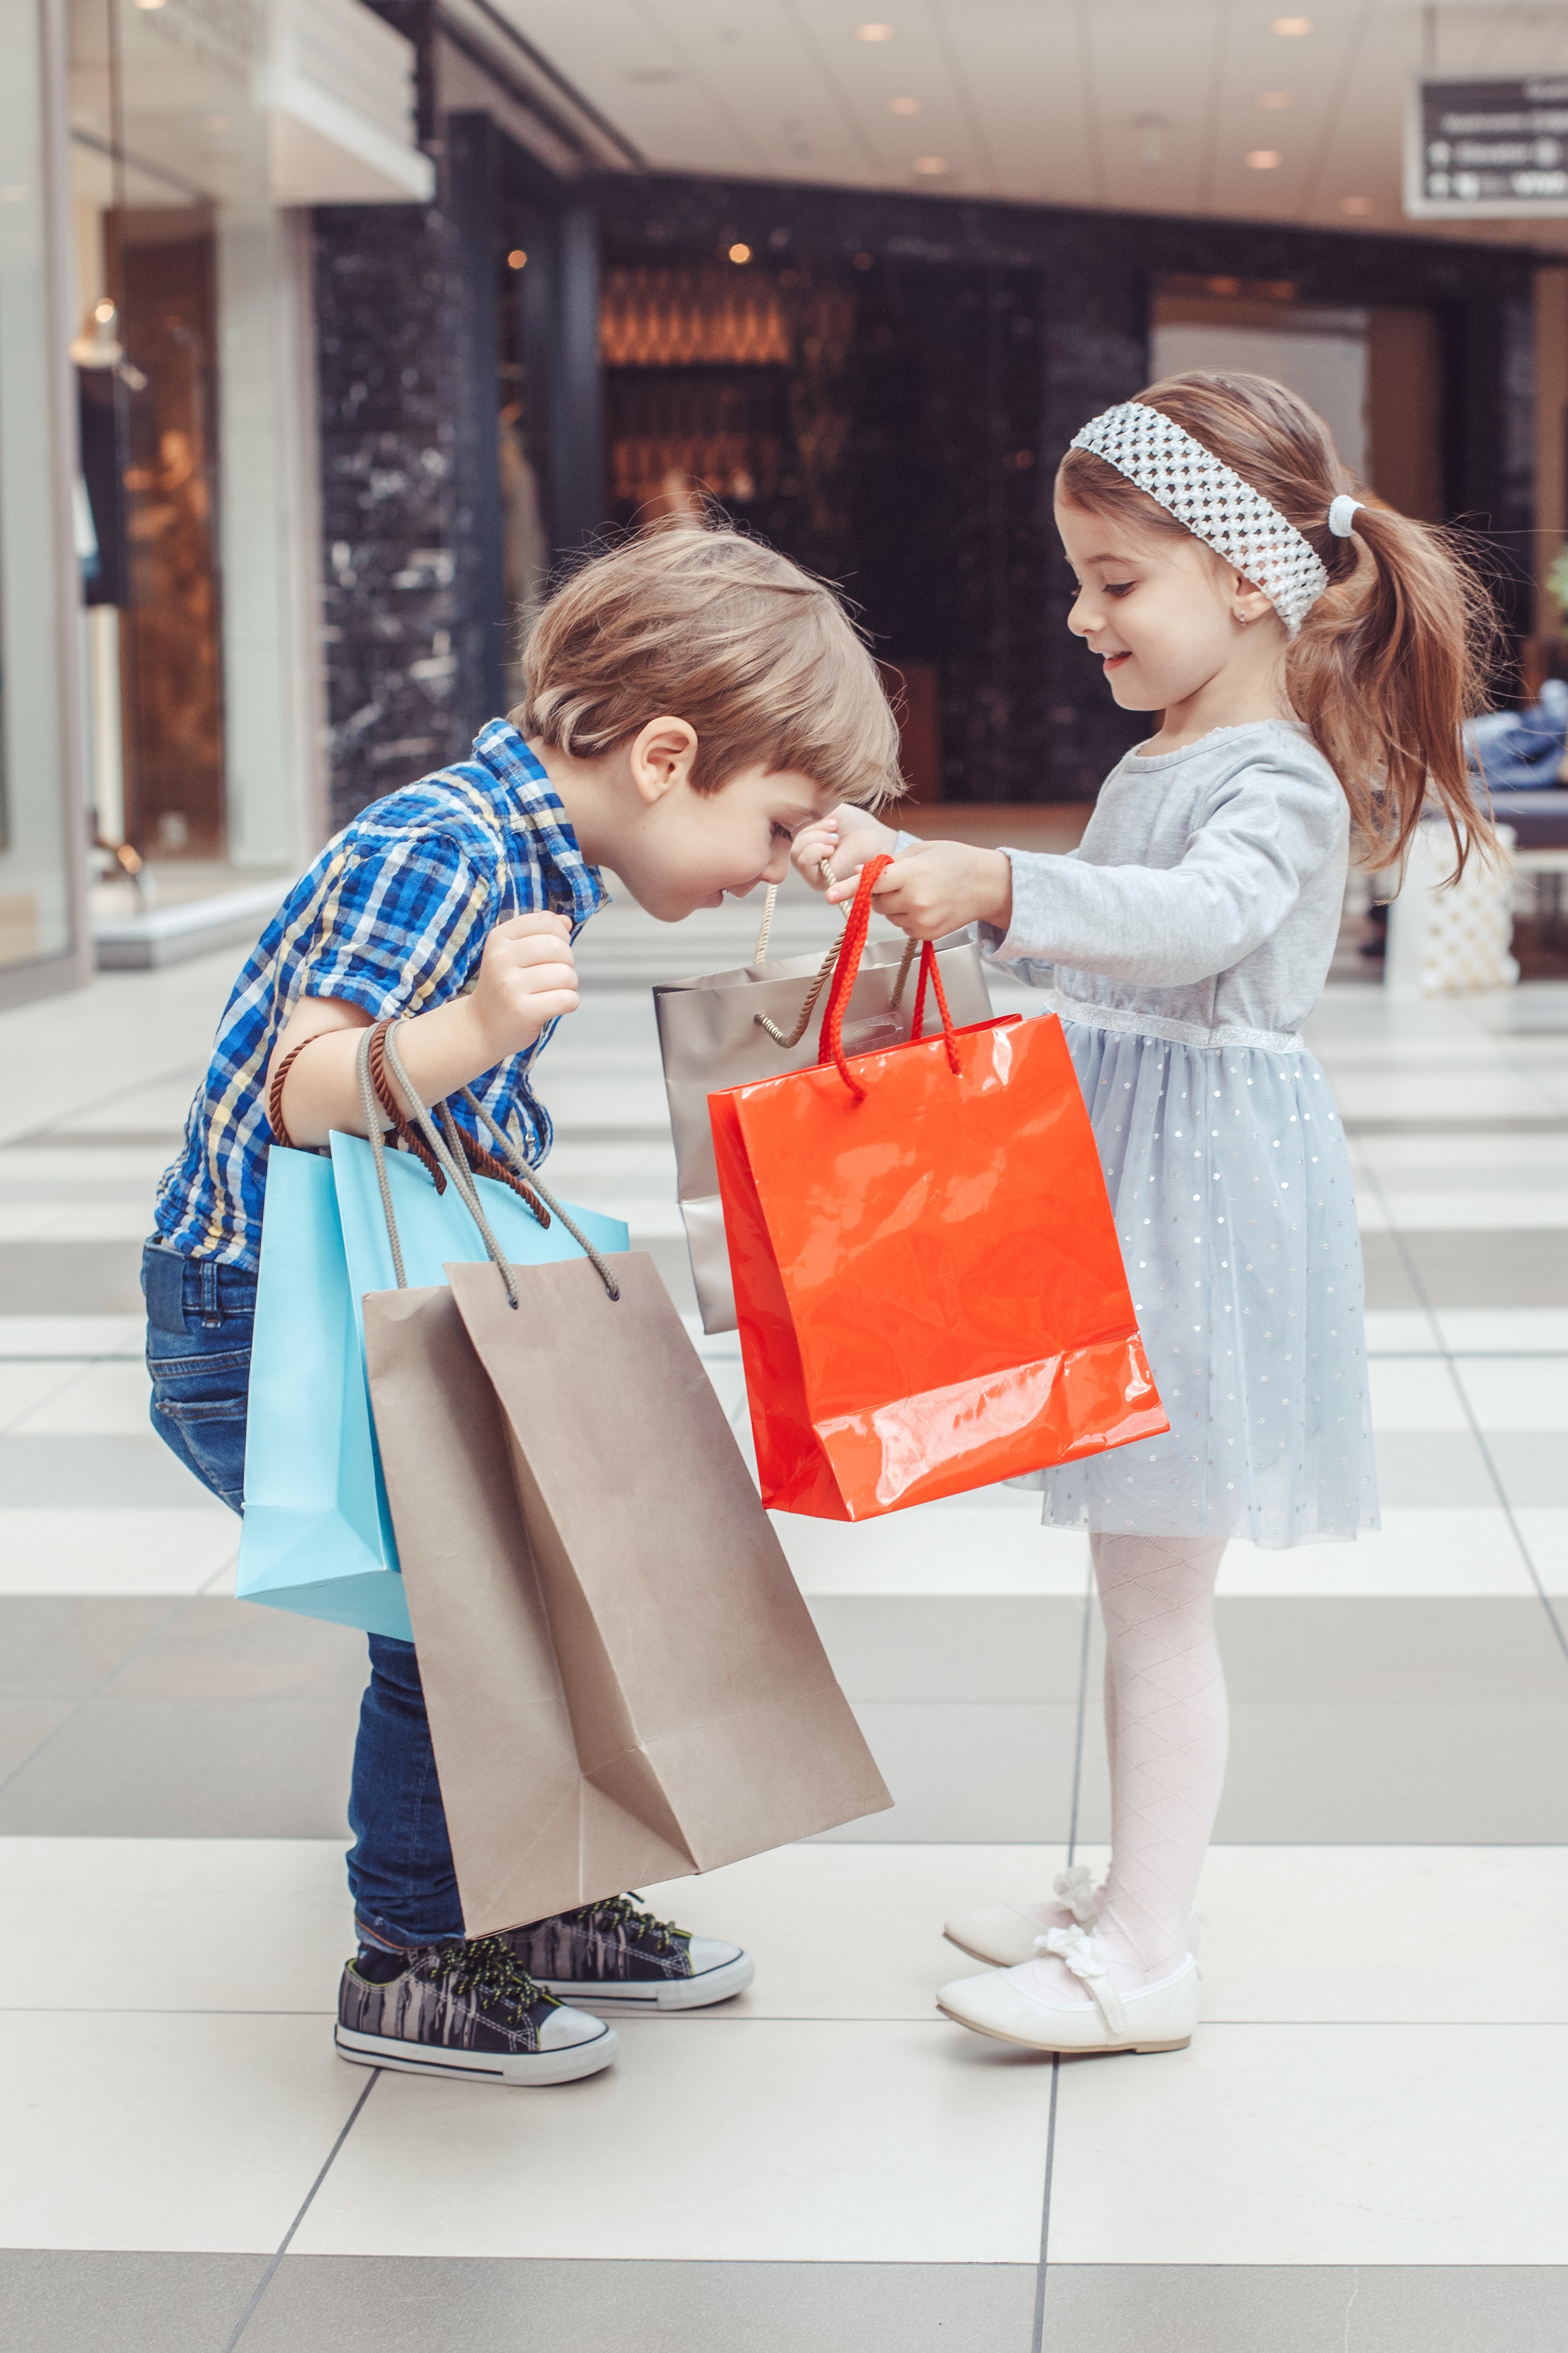 Go shopping mall. Дети шоппинг. Детский шоппинг. Шоппинг дети для детей. Детский шоппинг с мамой.